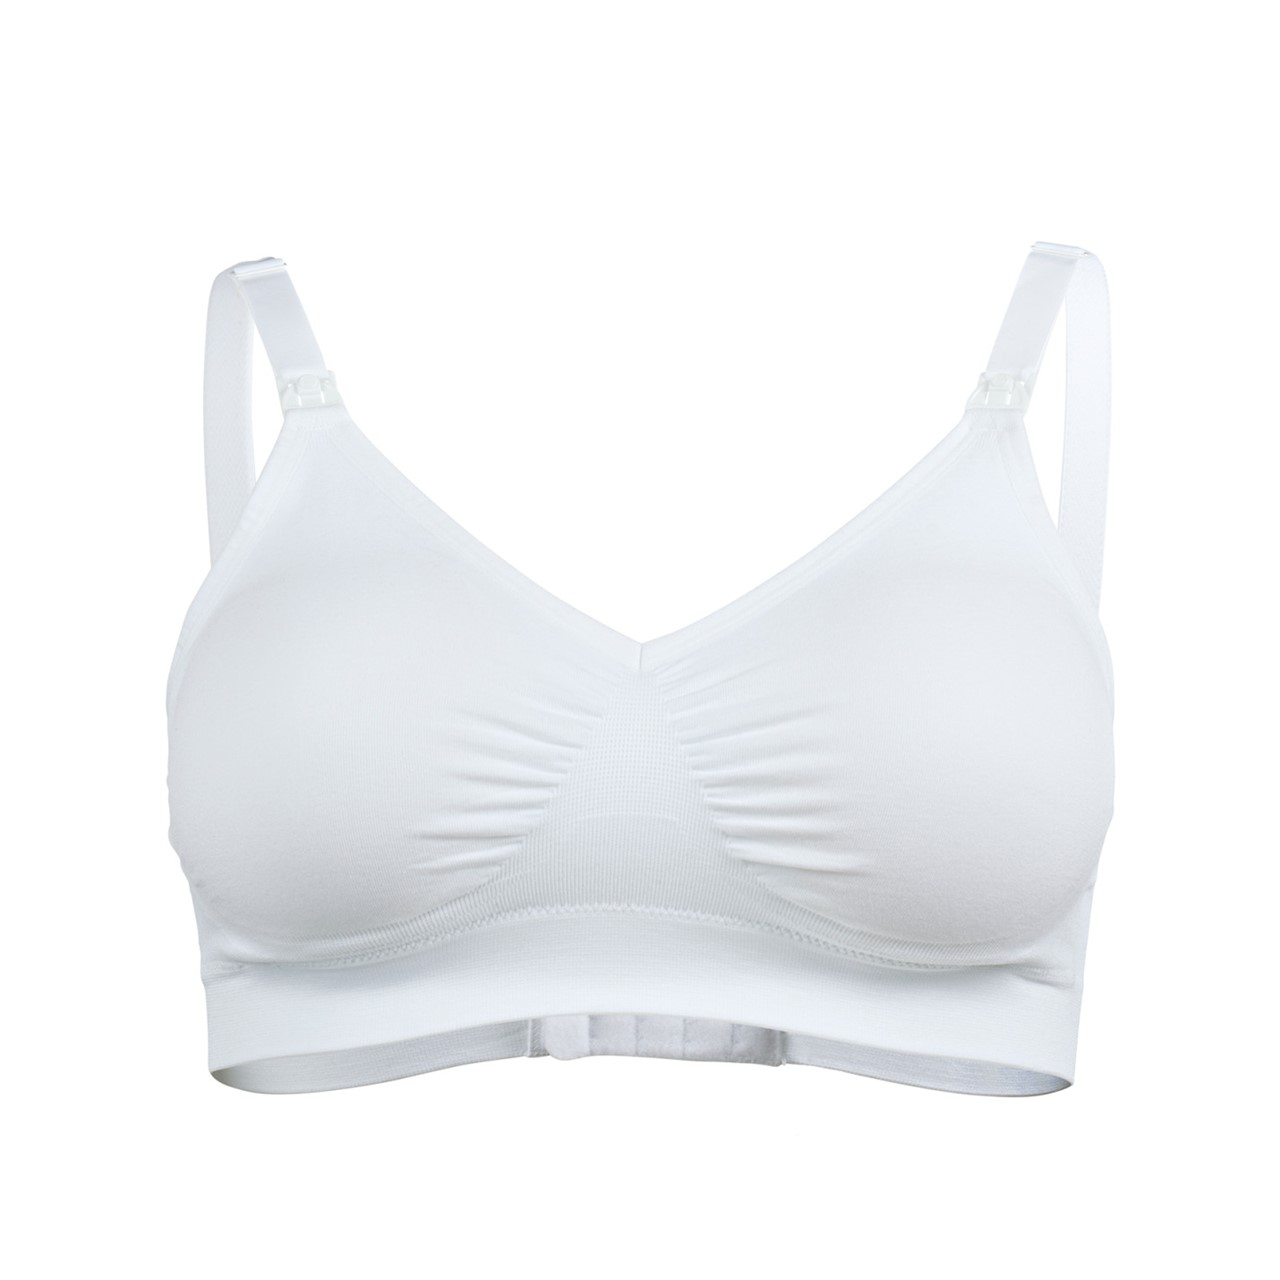 https://static.beautytocare.com/media/catalog/product/m/e/medela-comfy-bra-white-extra-large-size-x1.jpg